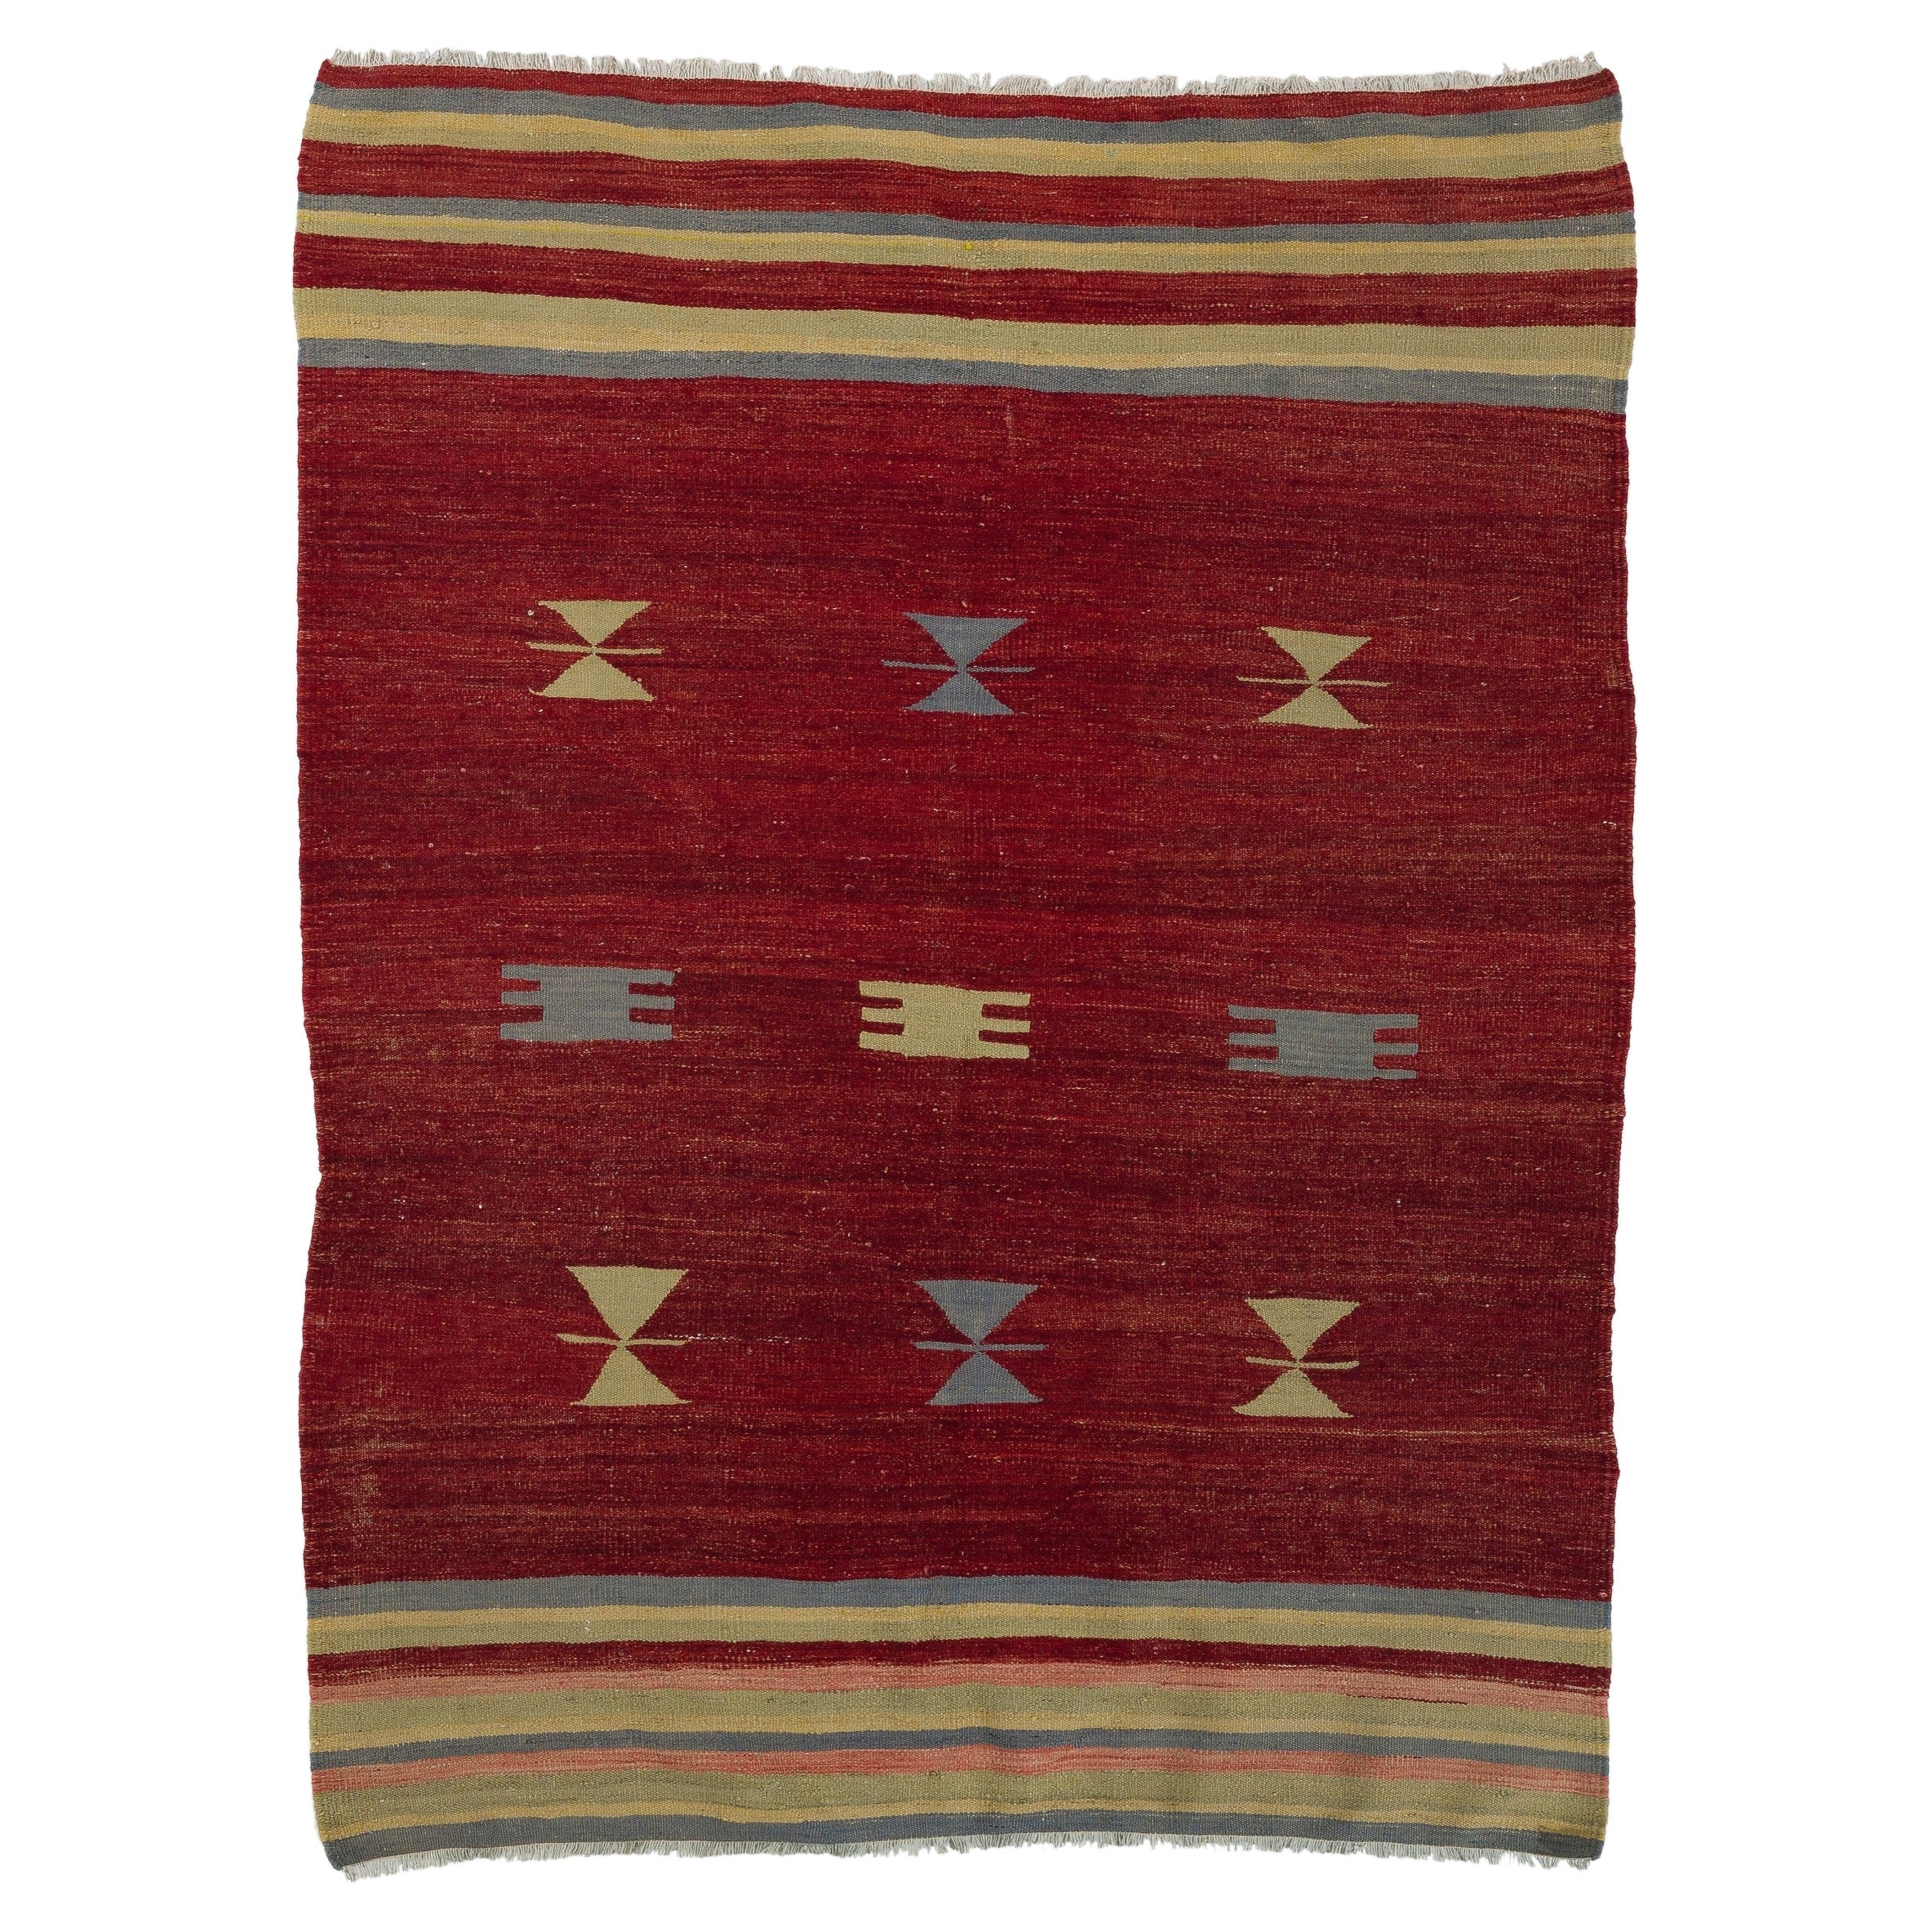 4.2x5.5 Ft Hand-Woven Vintage Anatolian Wool Kilim Rug, Flat-Weave Carpet